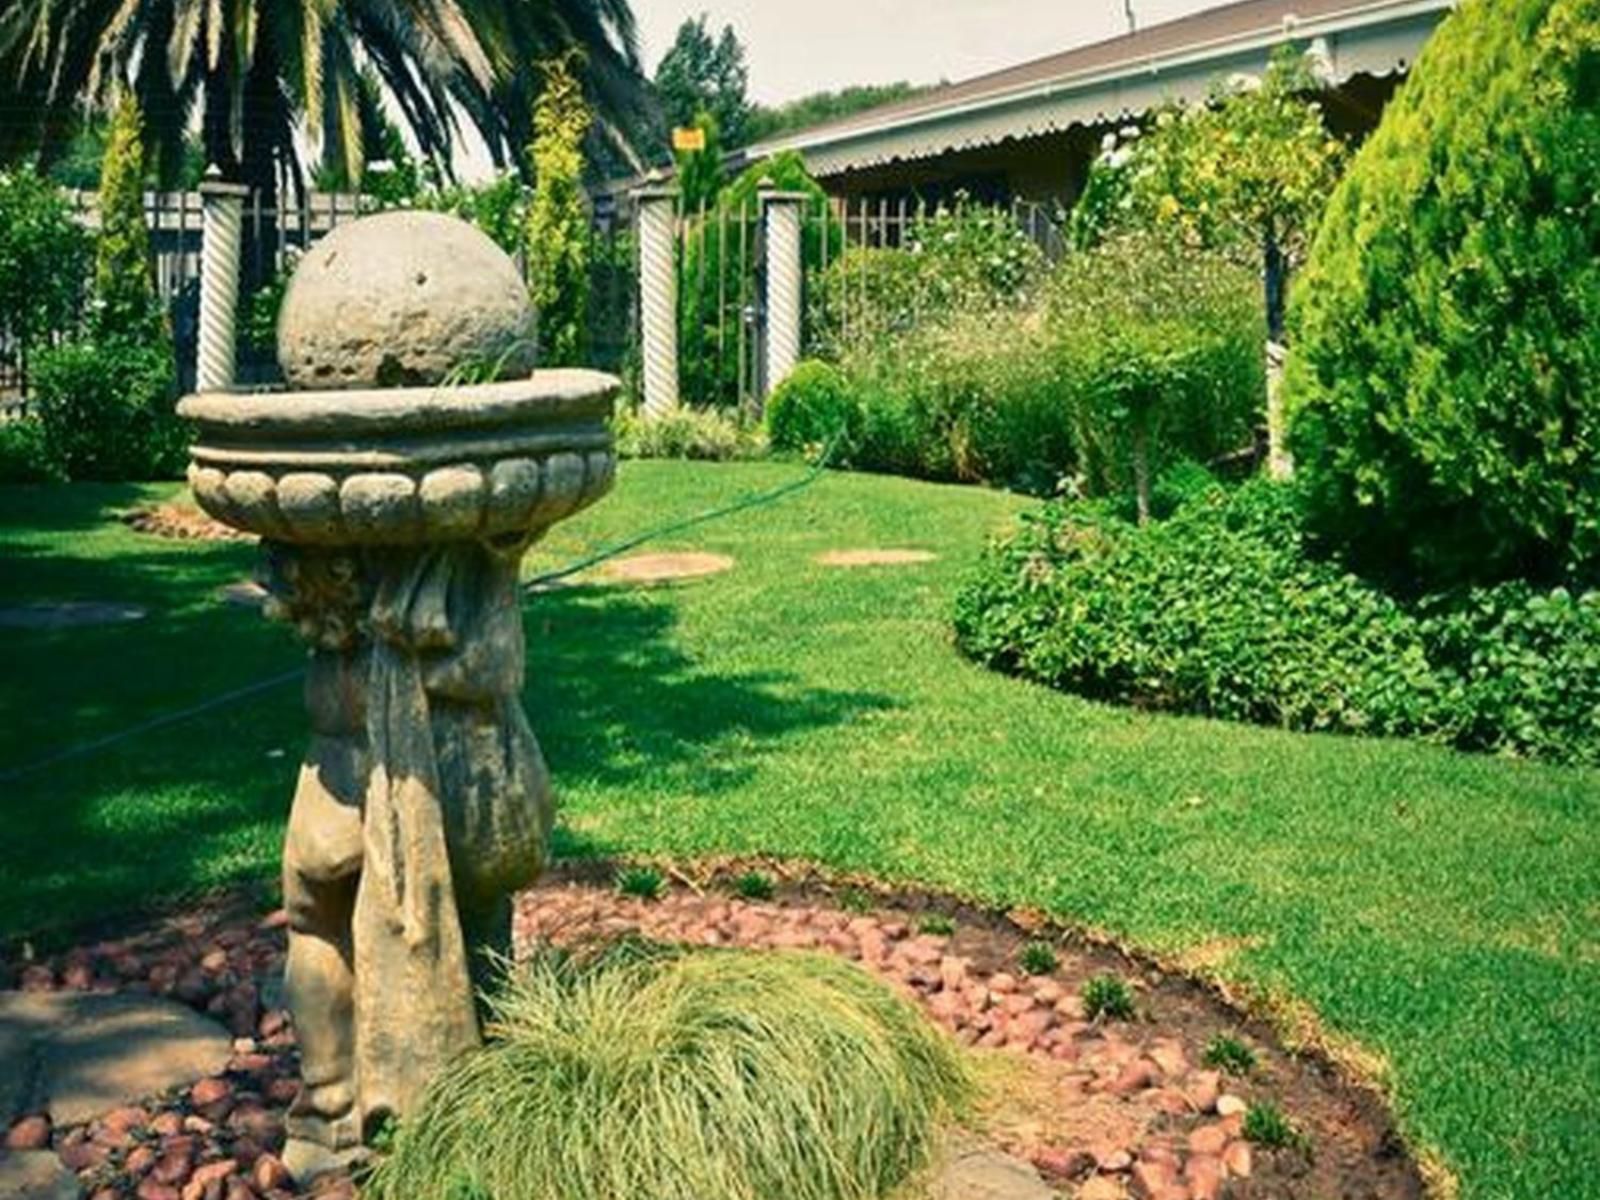 Wille Garden Flair Guesthouse Universitas Bloemfontein Free State South Africa Plant, Nature, Garden